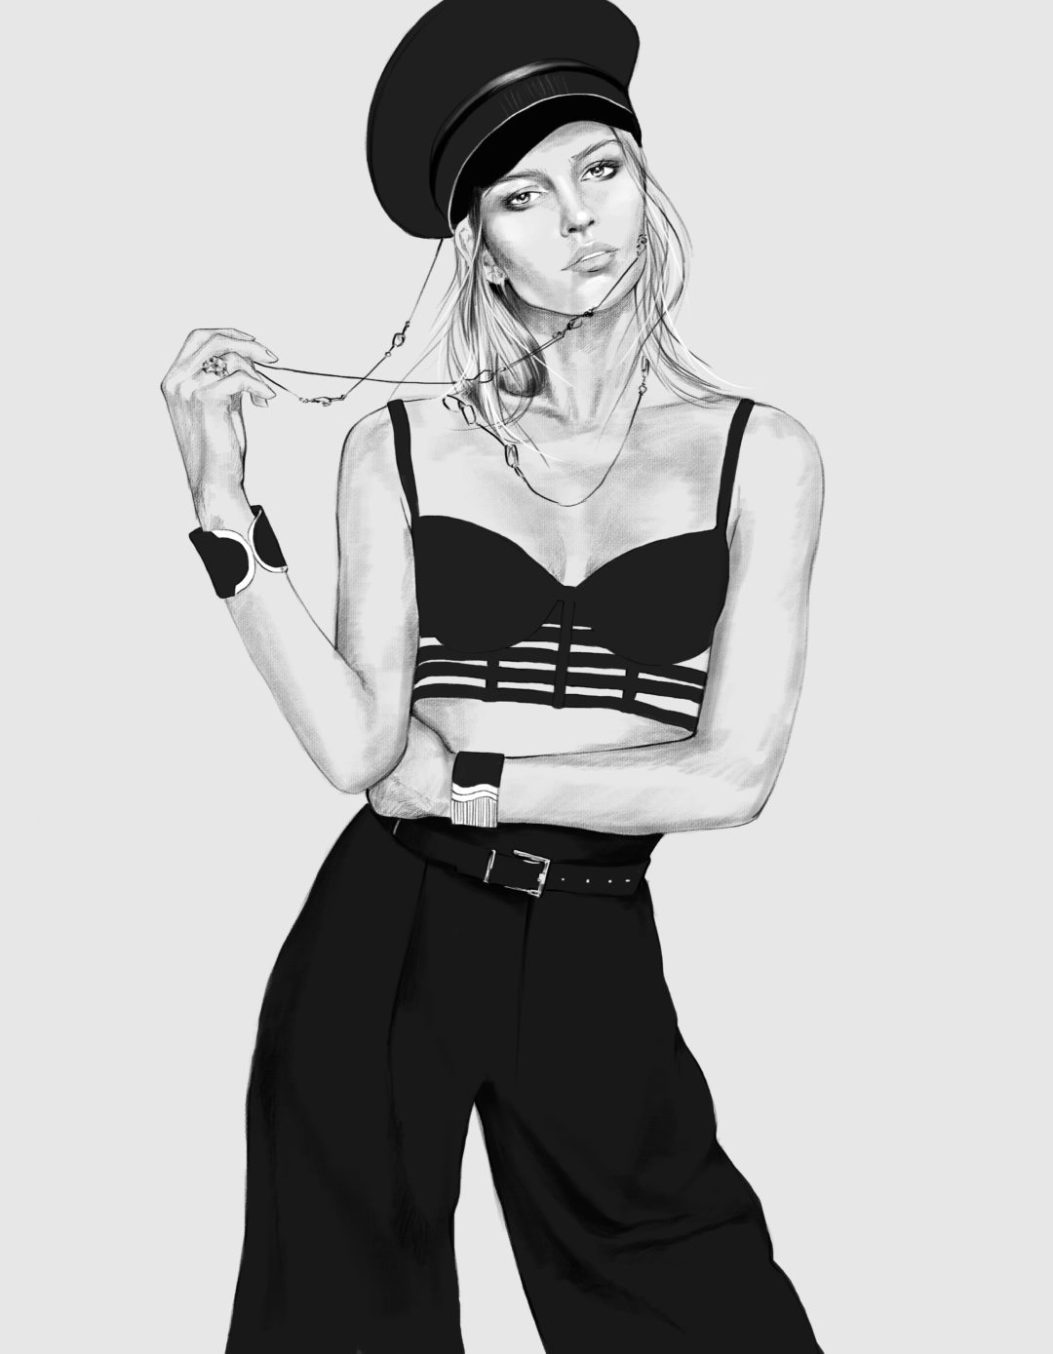 2D Black and White Female Fashion Model Illustration